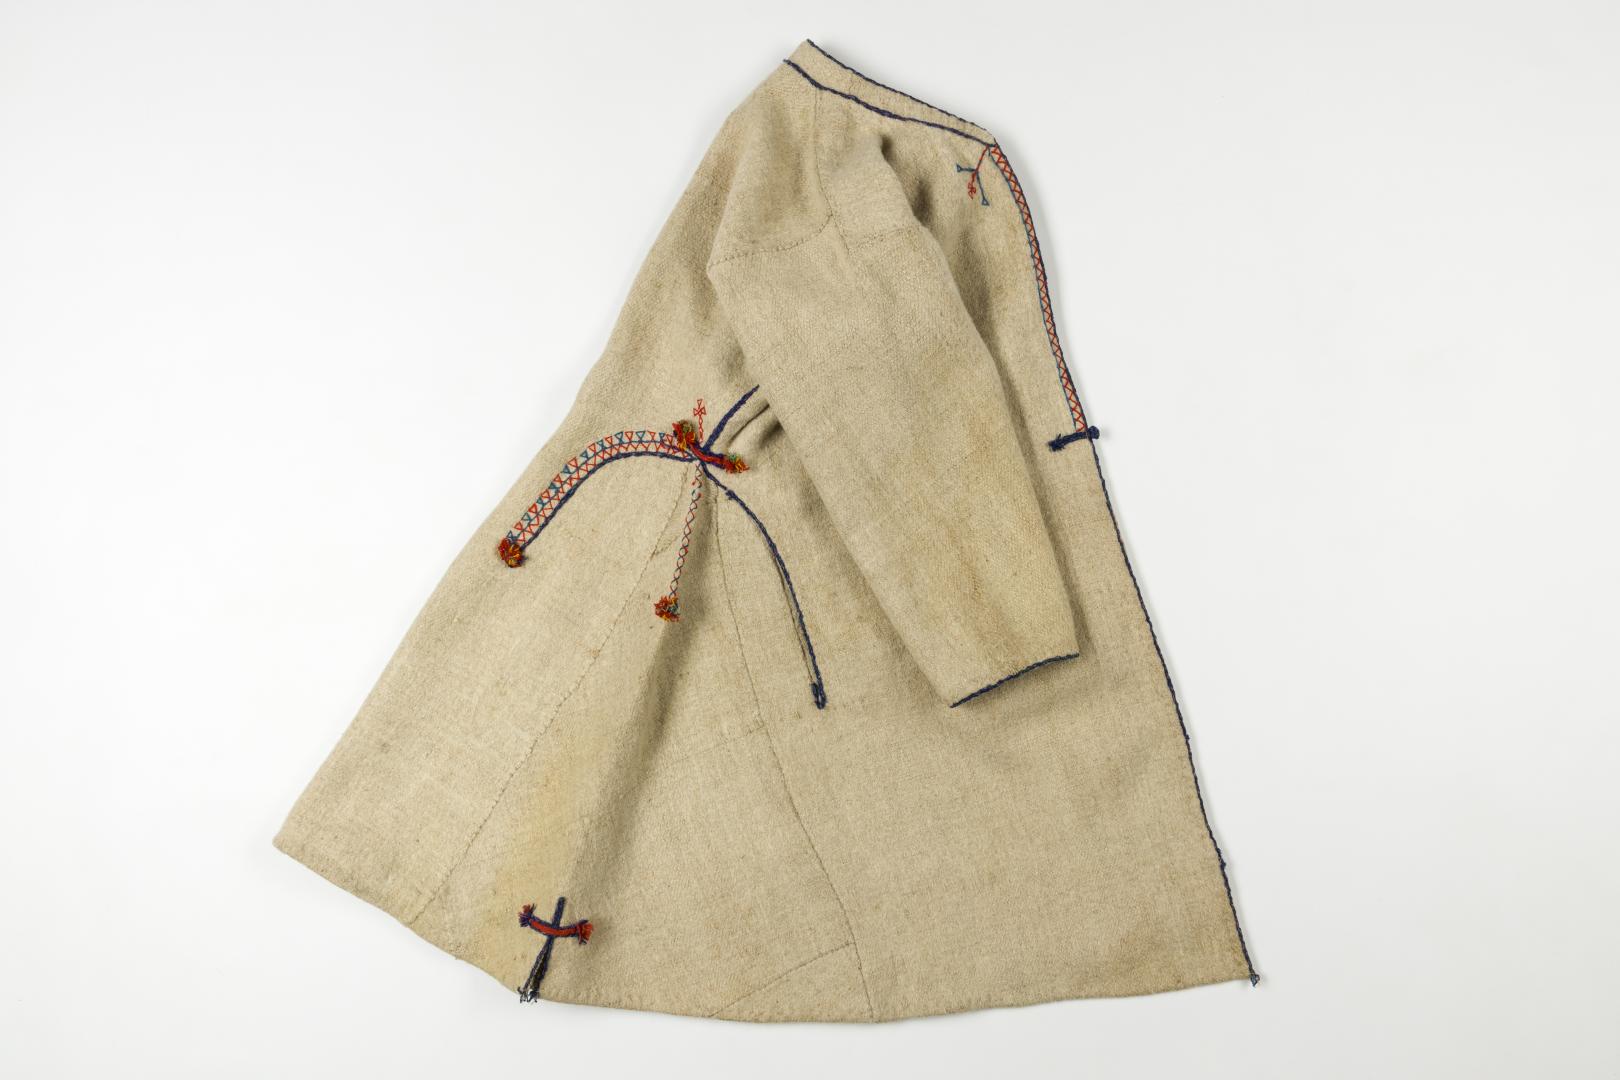 Svyta (women's coat made of white cloth)